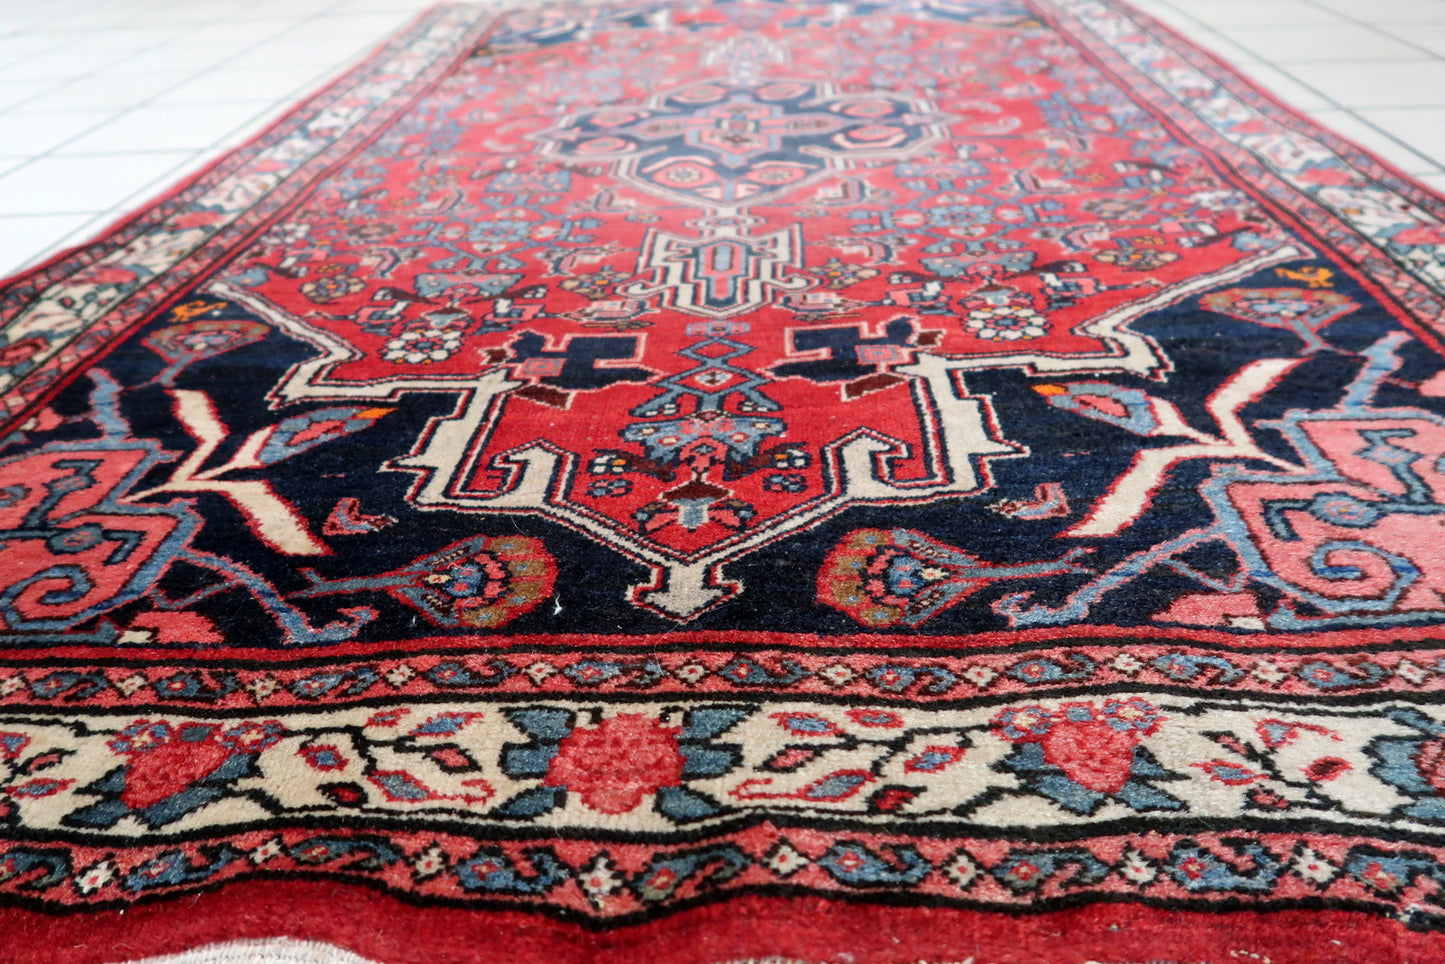 Close-up of warmth and vibrancy on Handmade Vintage Persian Bidjar Rug - Detailed view showcasing the warmth and vibrancy of the rug's color palette.